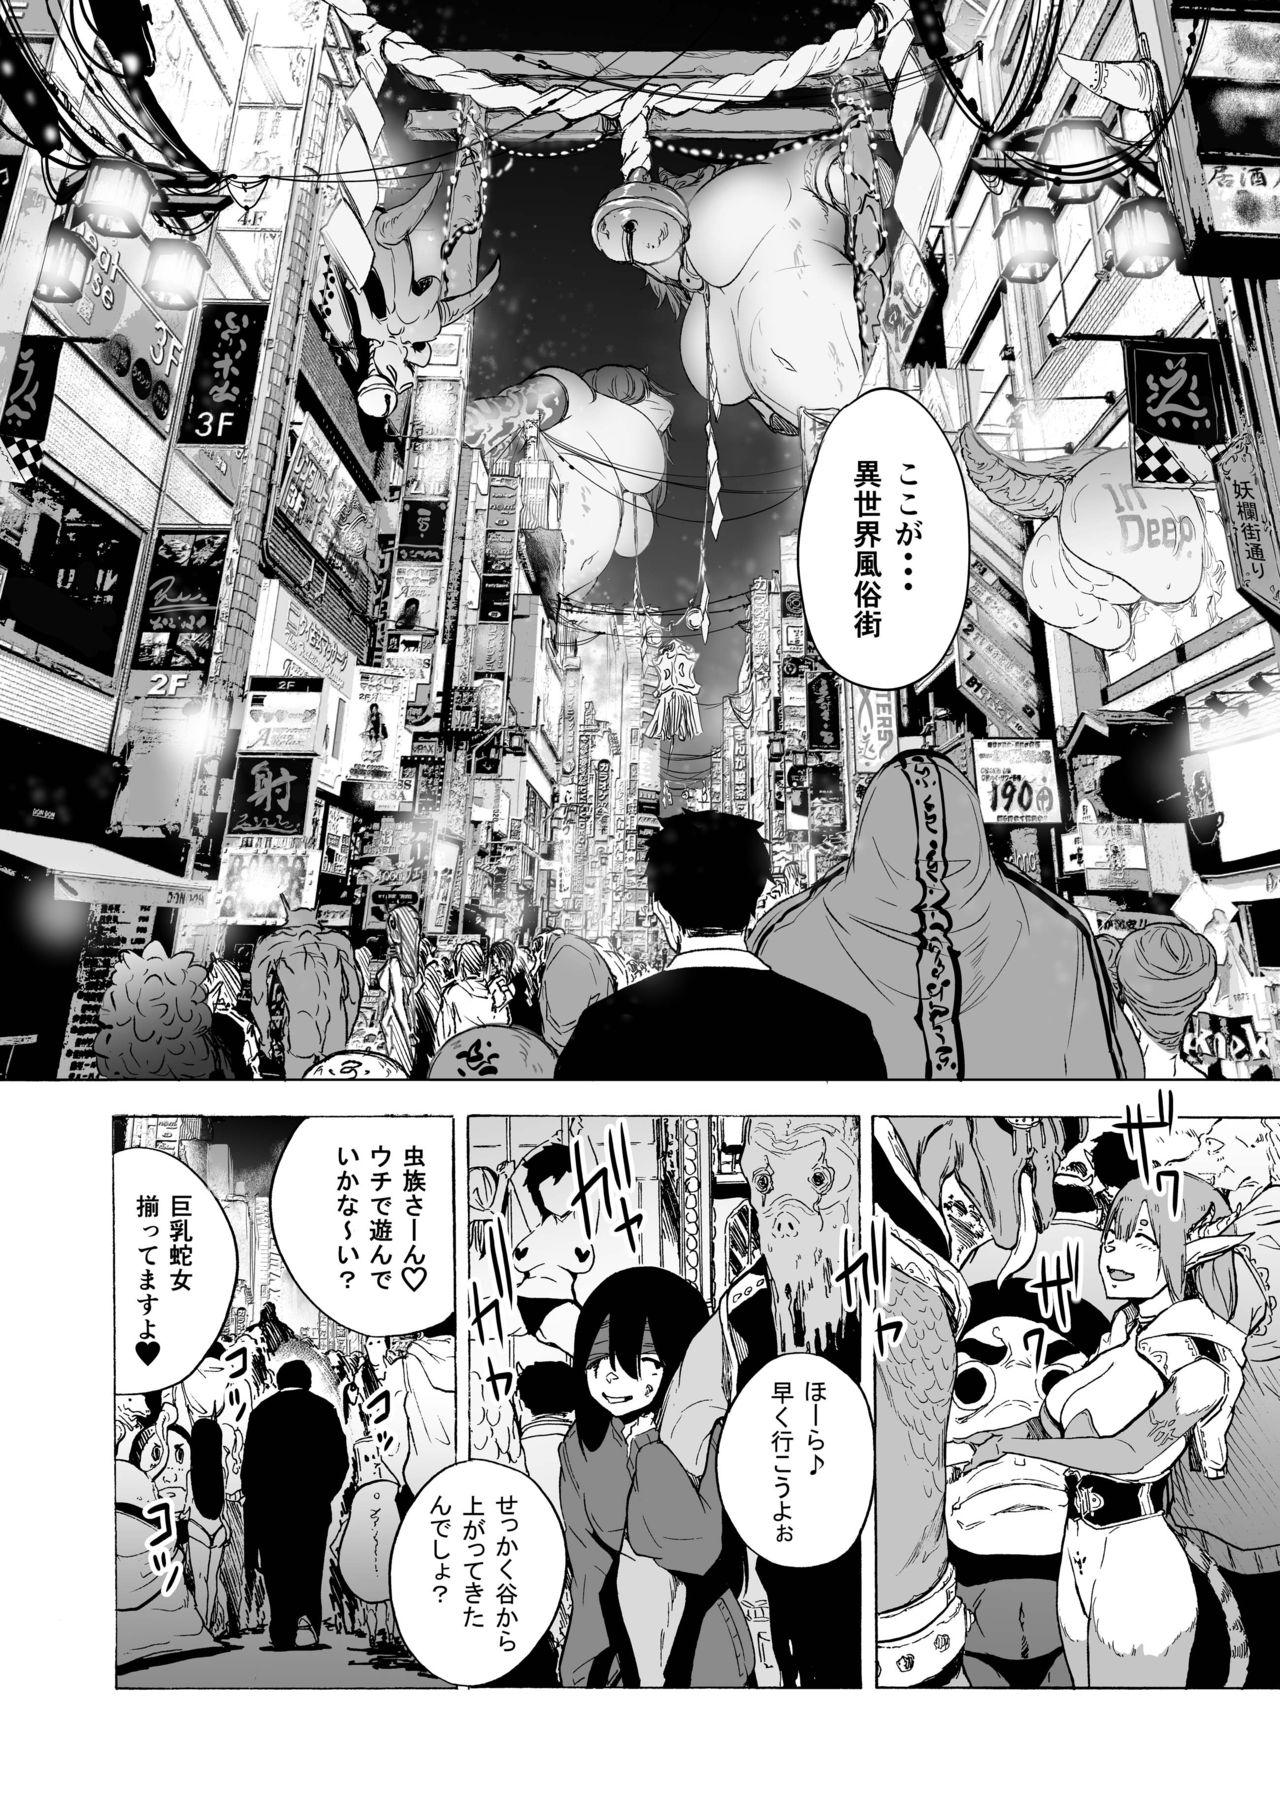 Moneytalks 『亜人風俗』コミックアンソロジー - Original Uncensored - Page 11